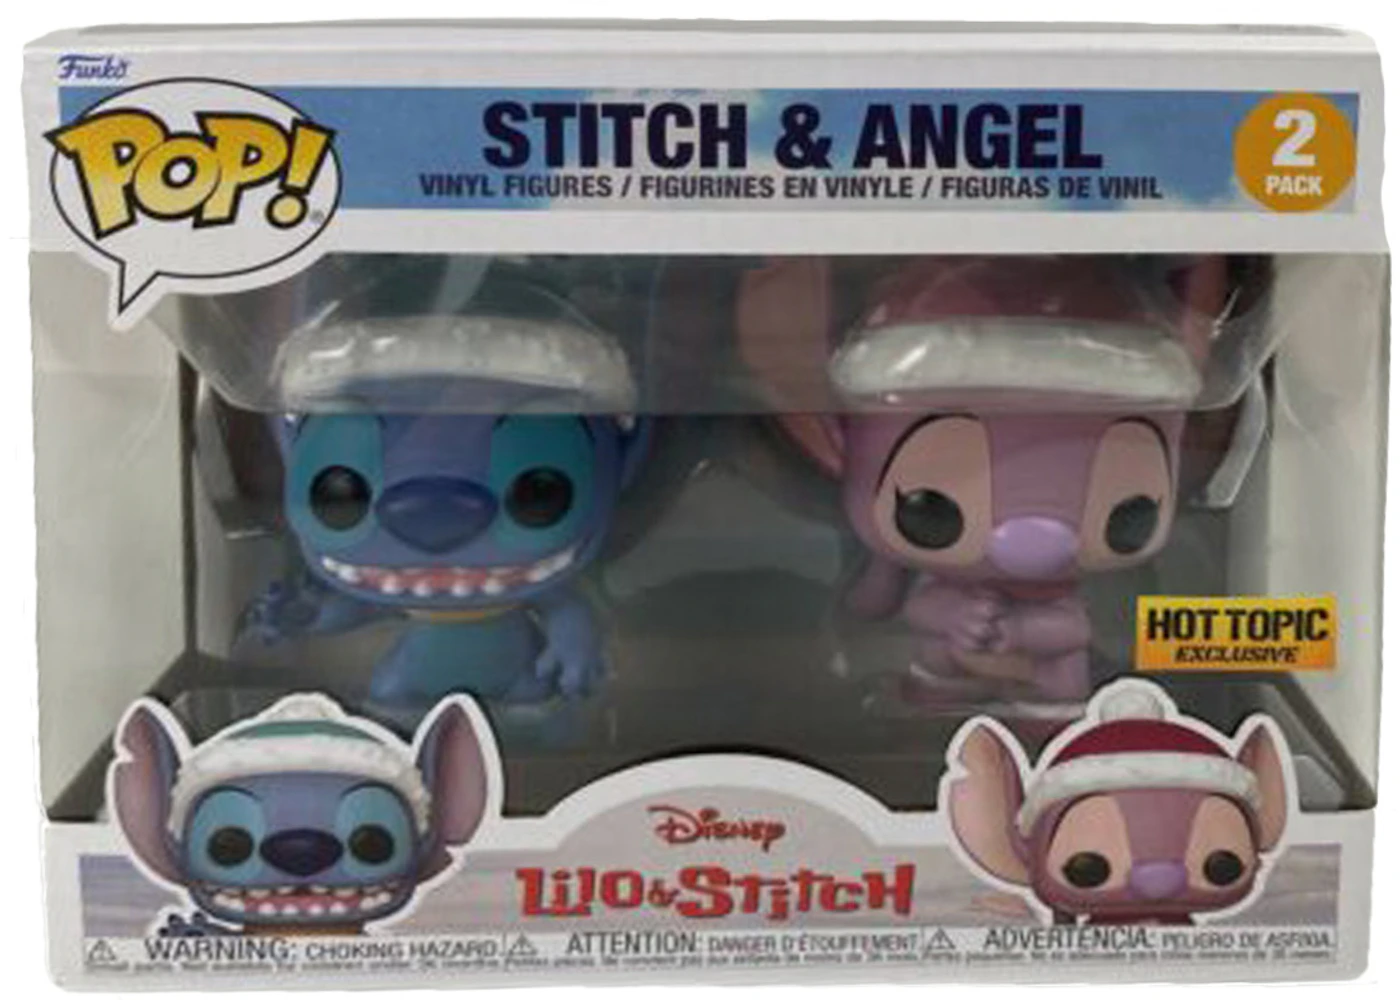 Funko Pop Disney's Lilo & Stitch - Scrump, Angel and Stitch (Hot